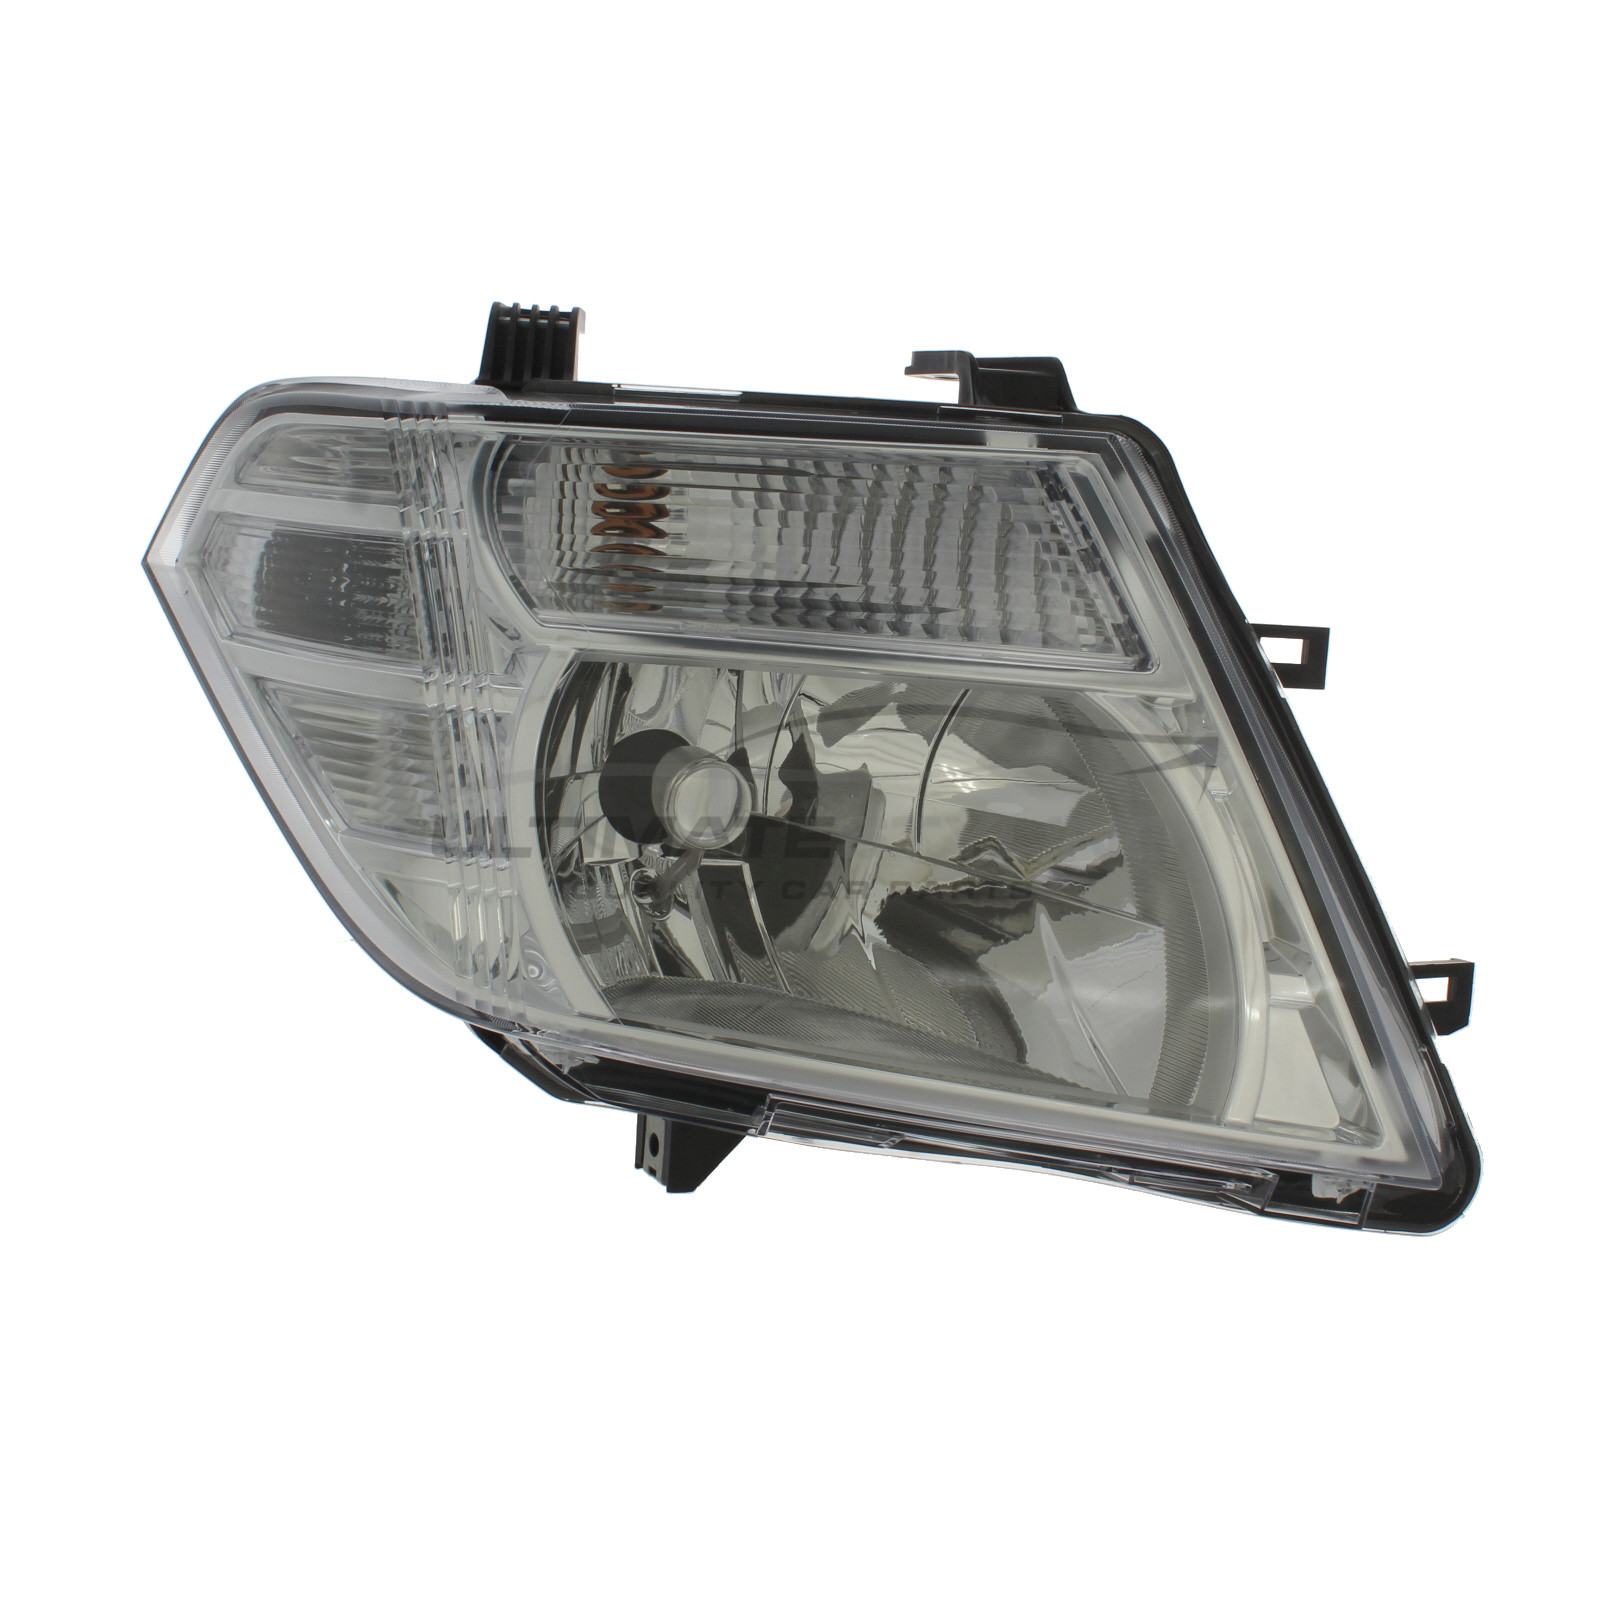 Headlight / Headlamp for Nissan Pathfinder